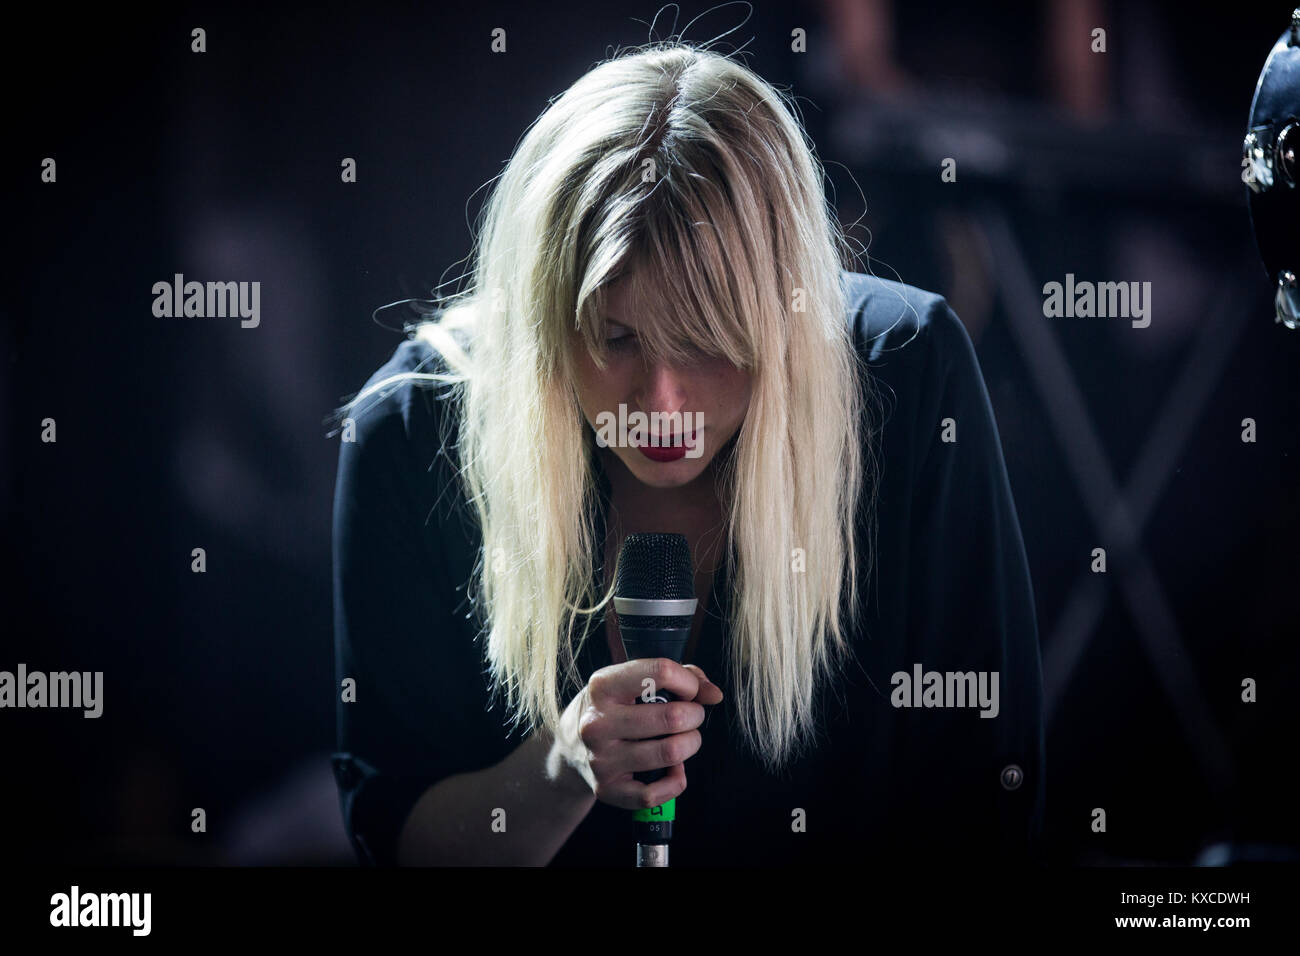 The Norwegian singer, songwriter and musician Susanne Sundfør performs a live concert at the Avelon Stage the Danish music festival Roskilde Festival 2015. Denmark, 03/07 2015. Stock Photo